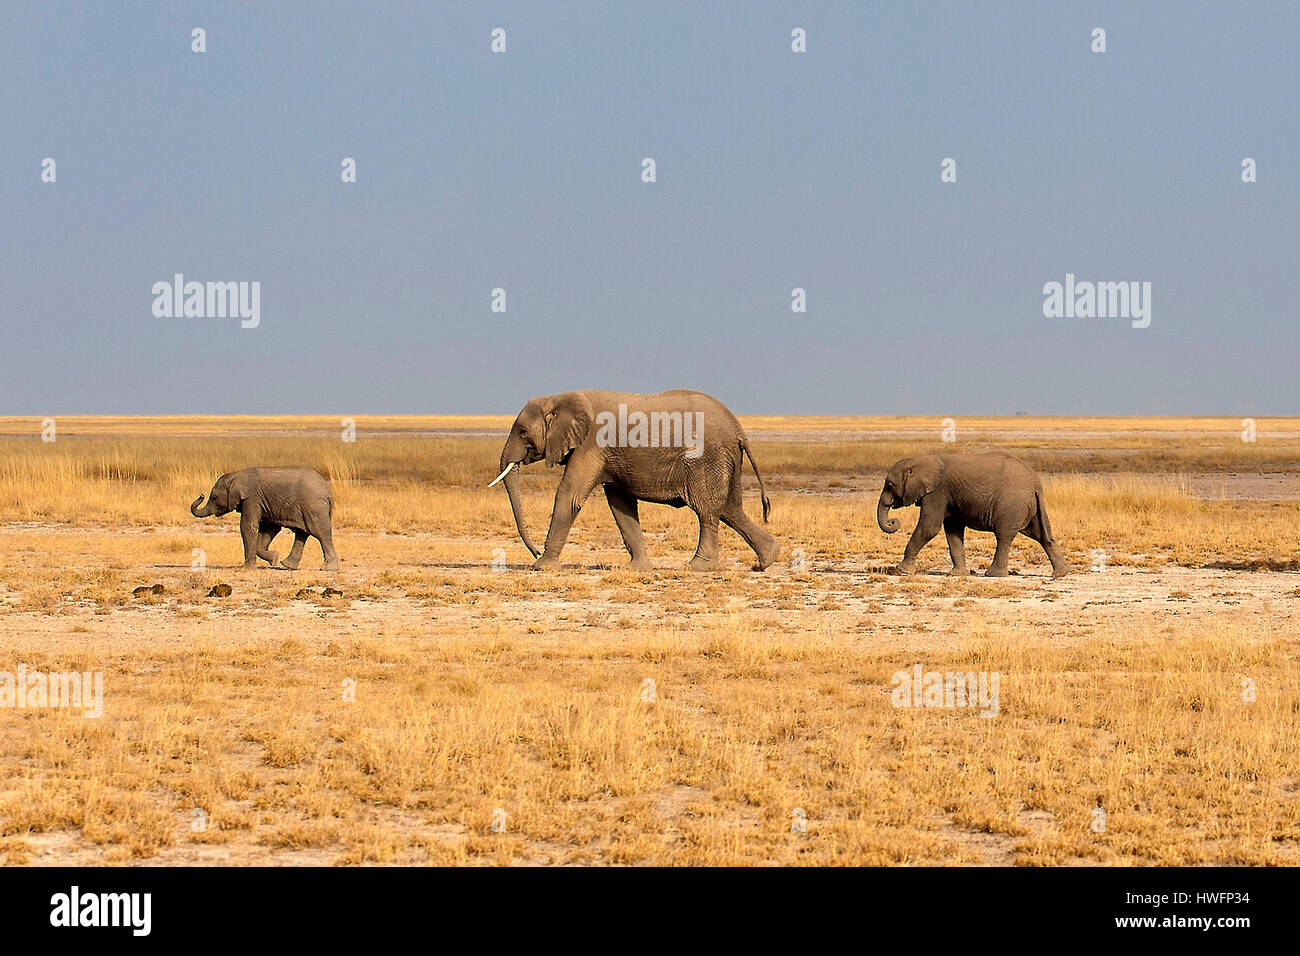 African elephants in Amboseli National Park, Kenya. Stock Photo